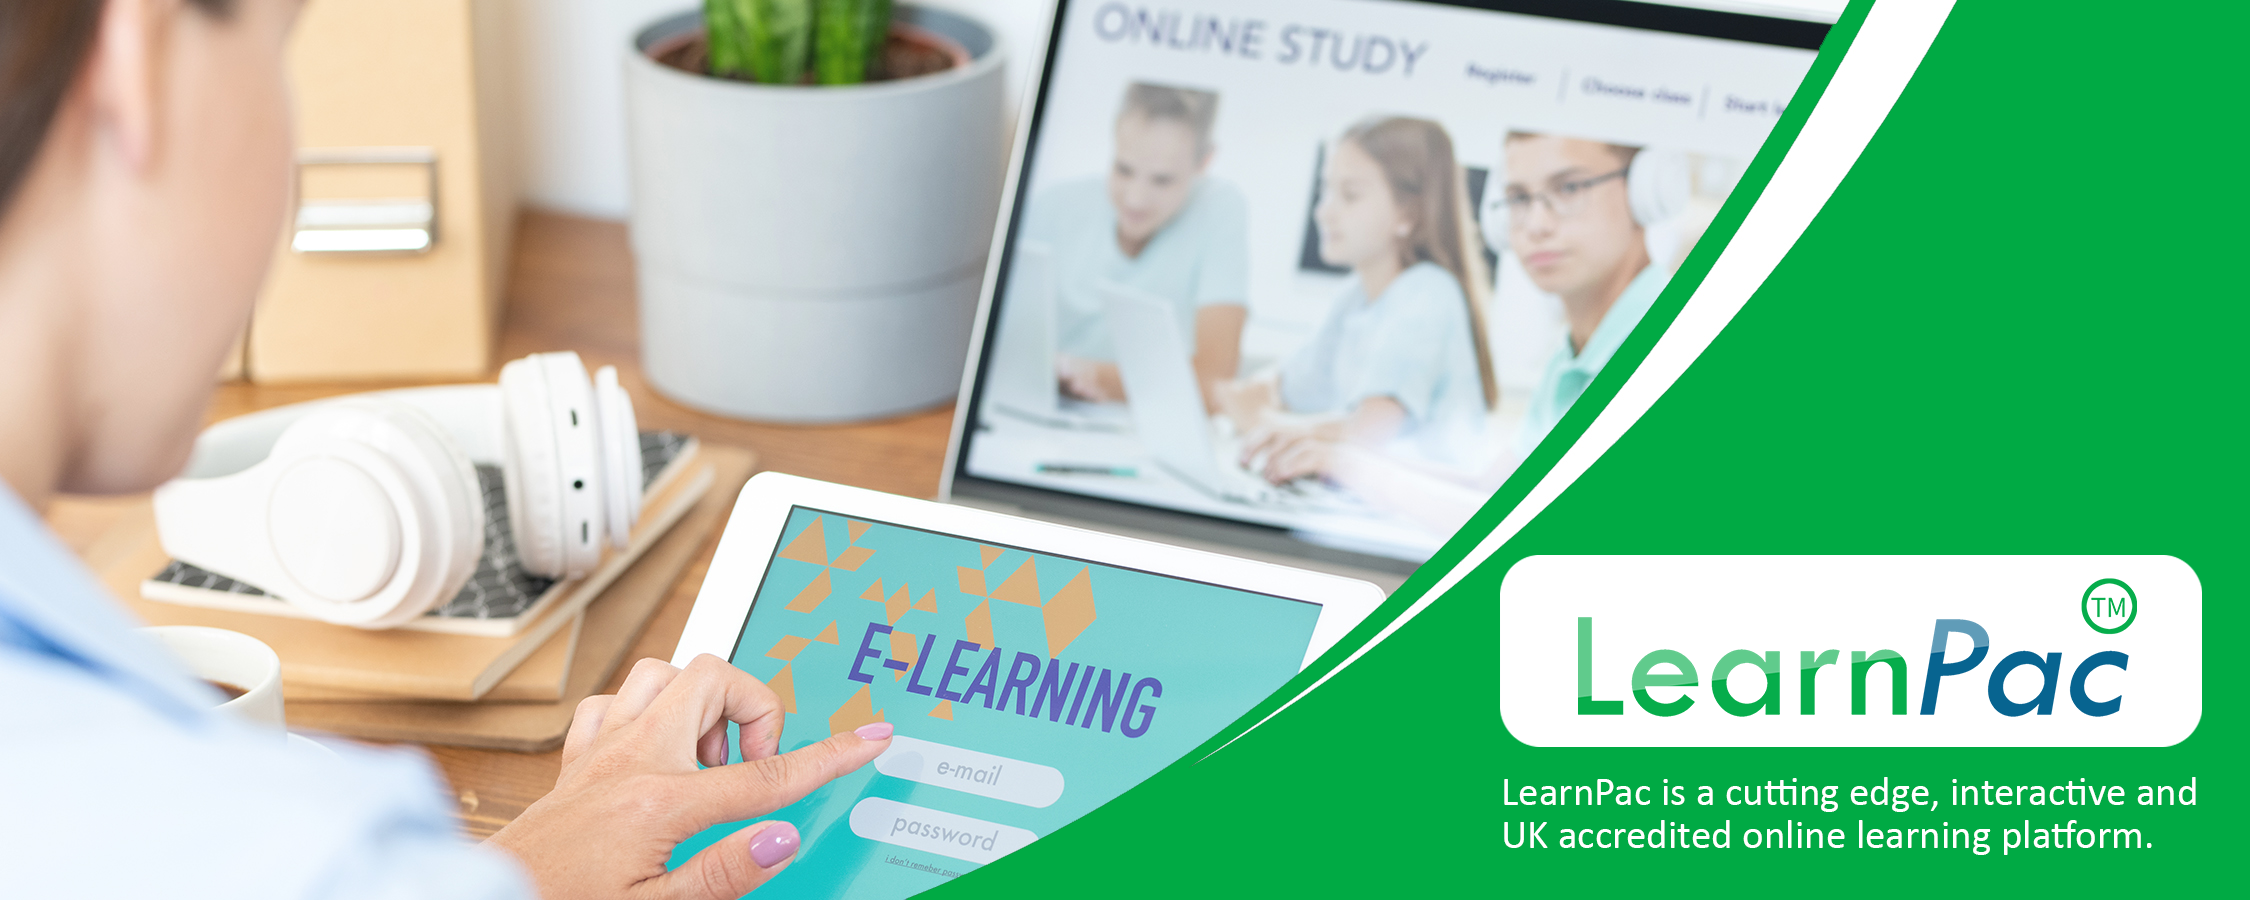 Business Etiquette Training - Online Learning Courses - E-Learning Courses - LearnPac Systems UK -